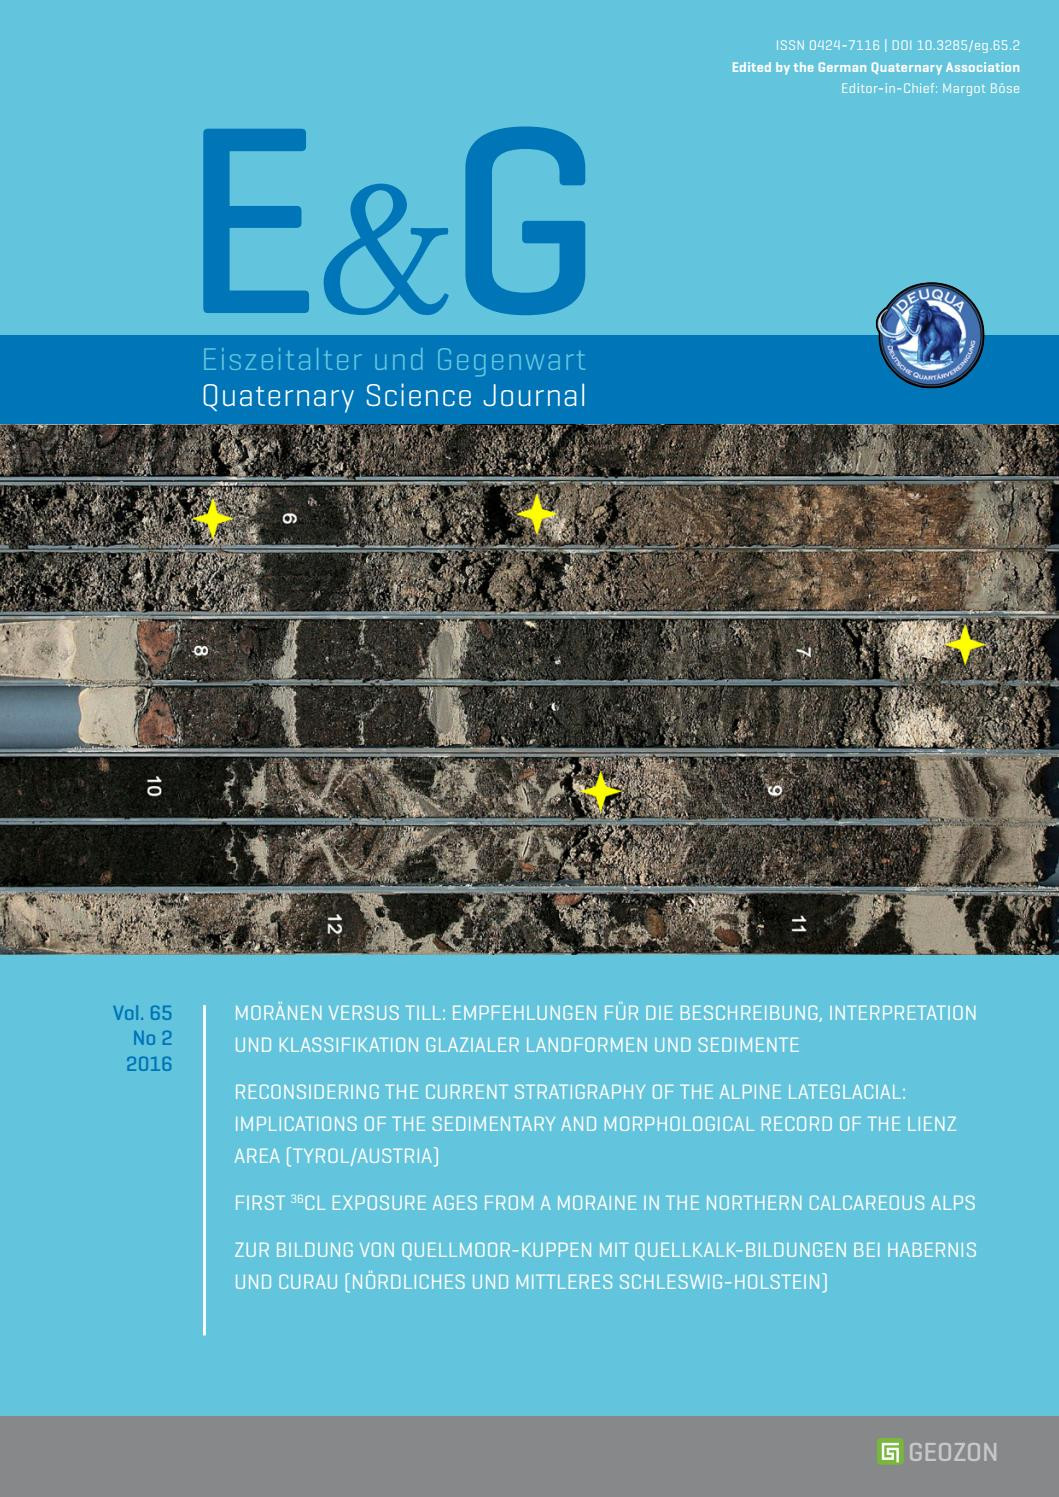 Outside Sales Aluminum Extrusions Resume Sample E&g â Quaternary Science Journal – Vol. 65 No 2 by Geozon …